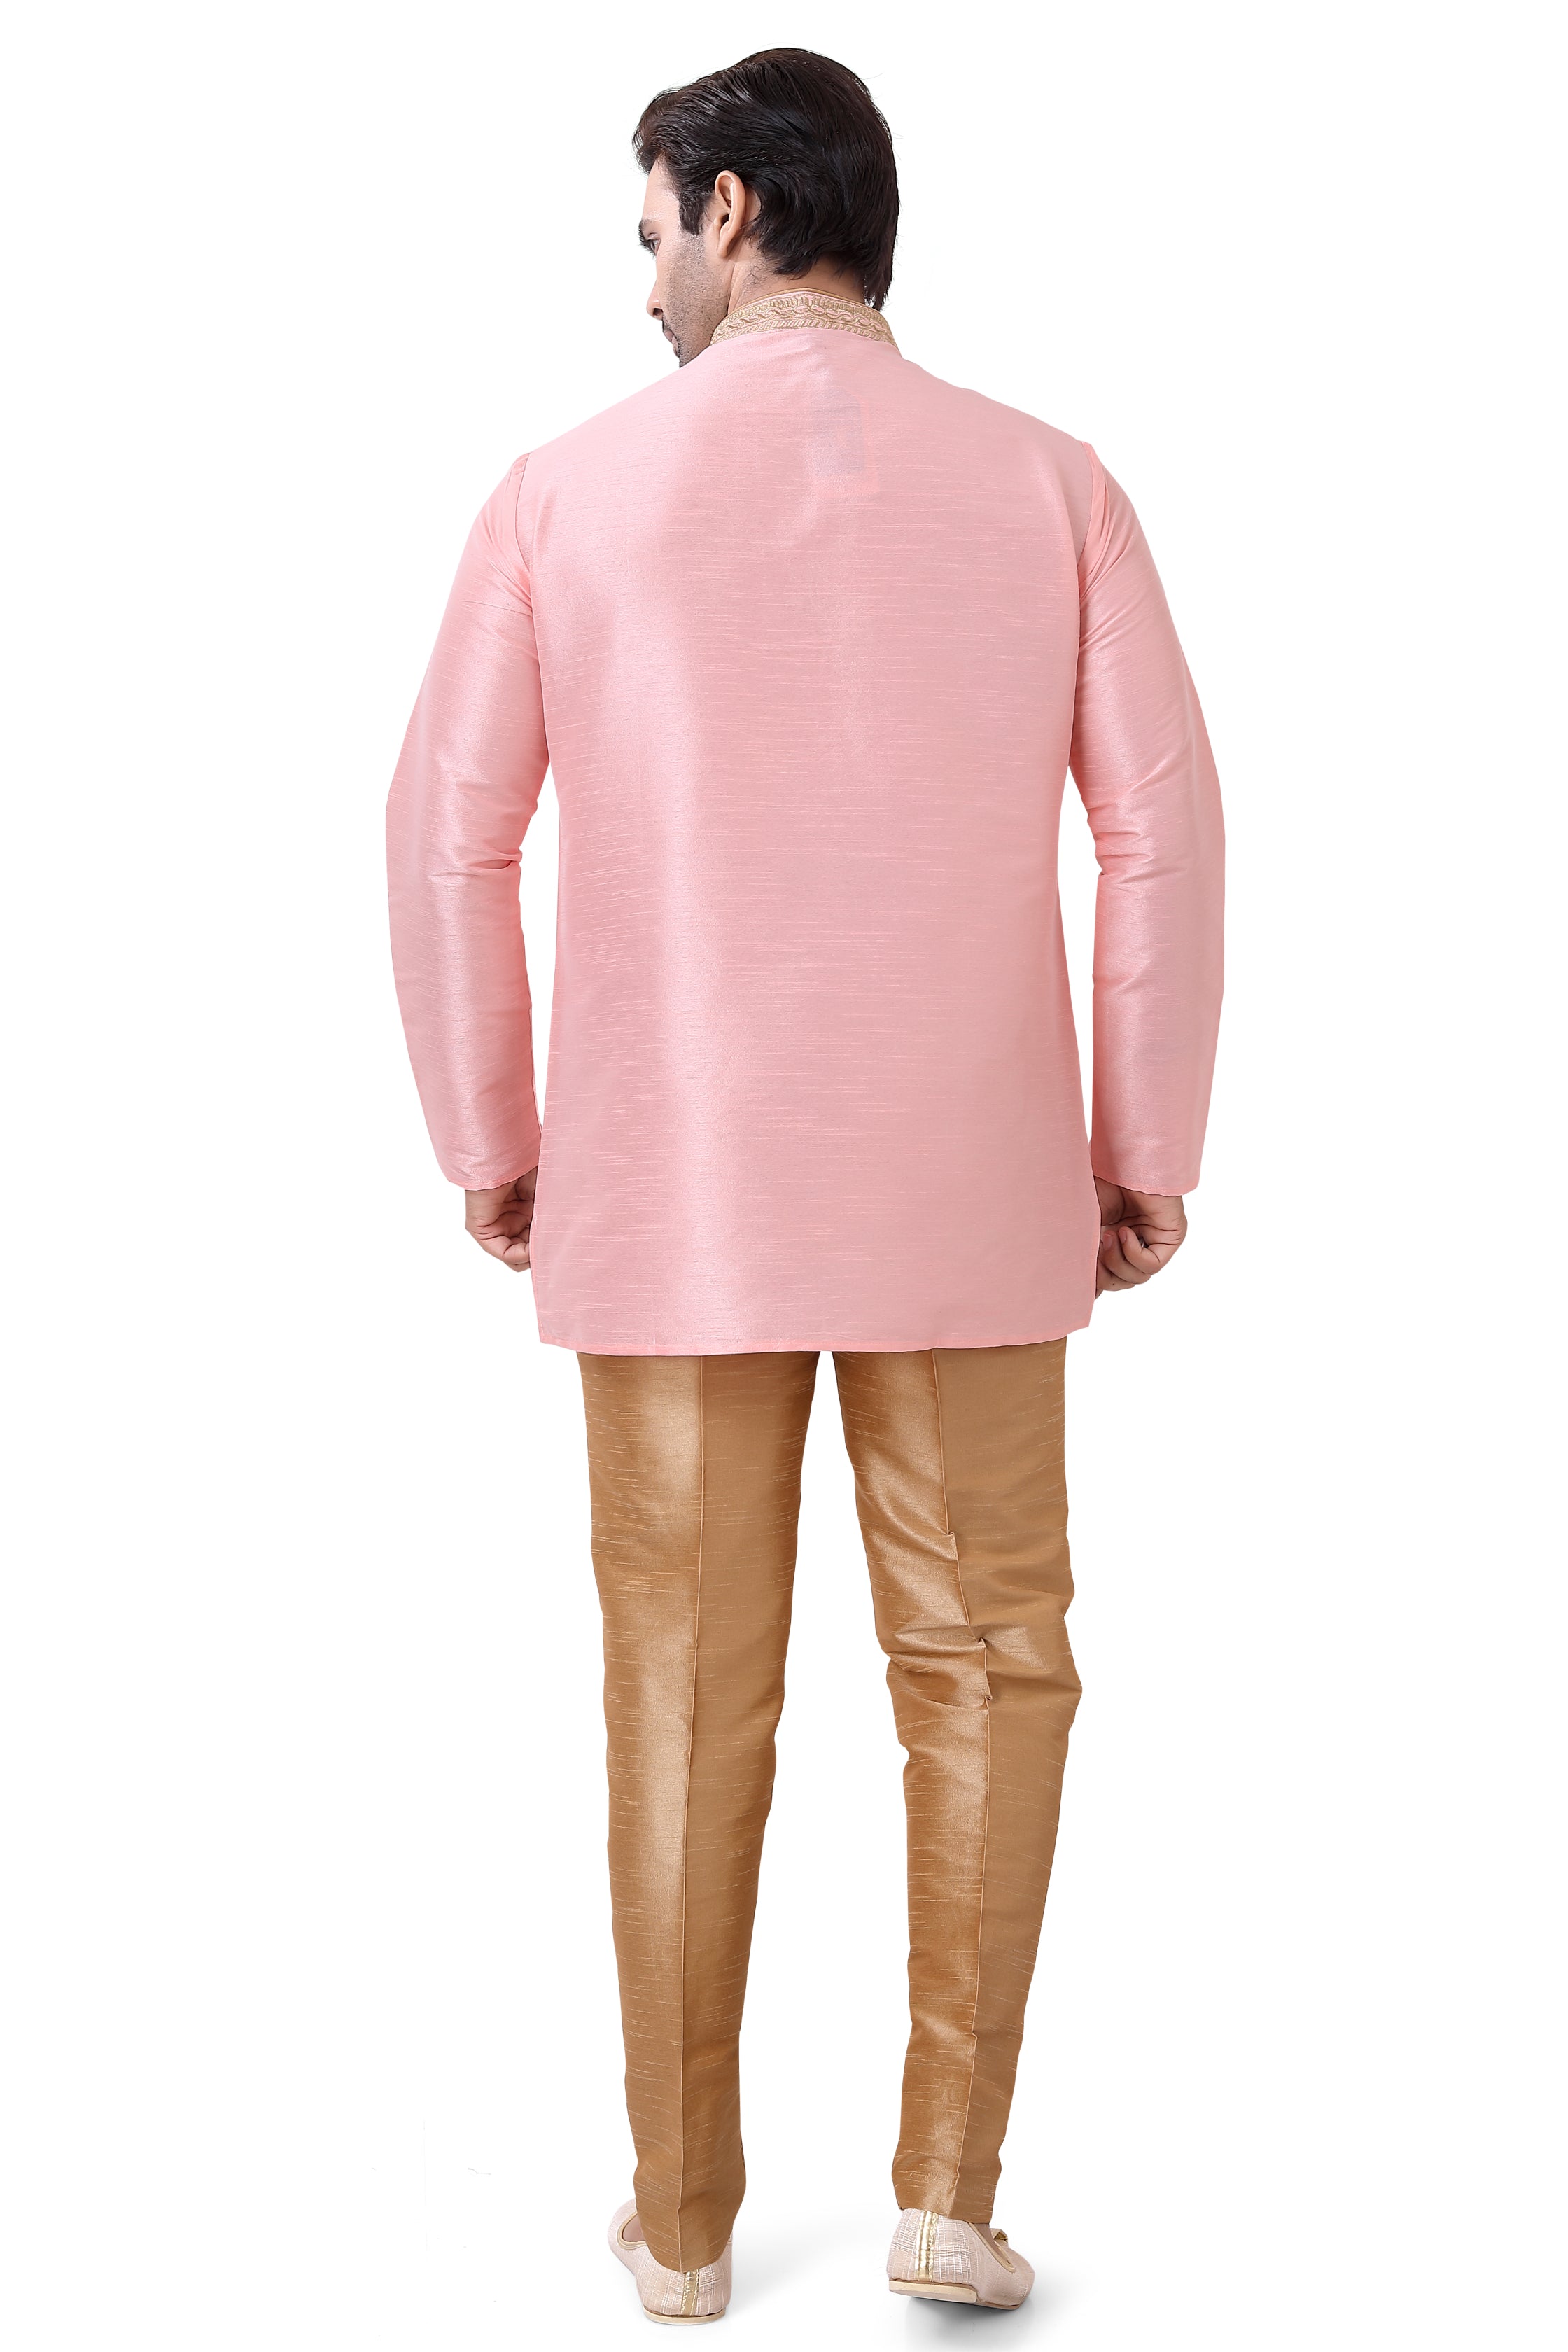 Banarasi Dupion Silk Short Kurta with embroidery in Light Pink color - Premium kurta pajama from Dapper Ethnic - Just $49! Shop now at Dulhan Exclusives